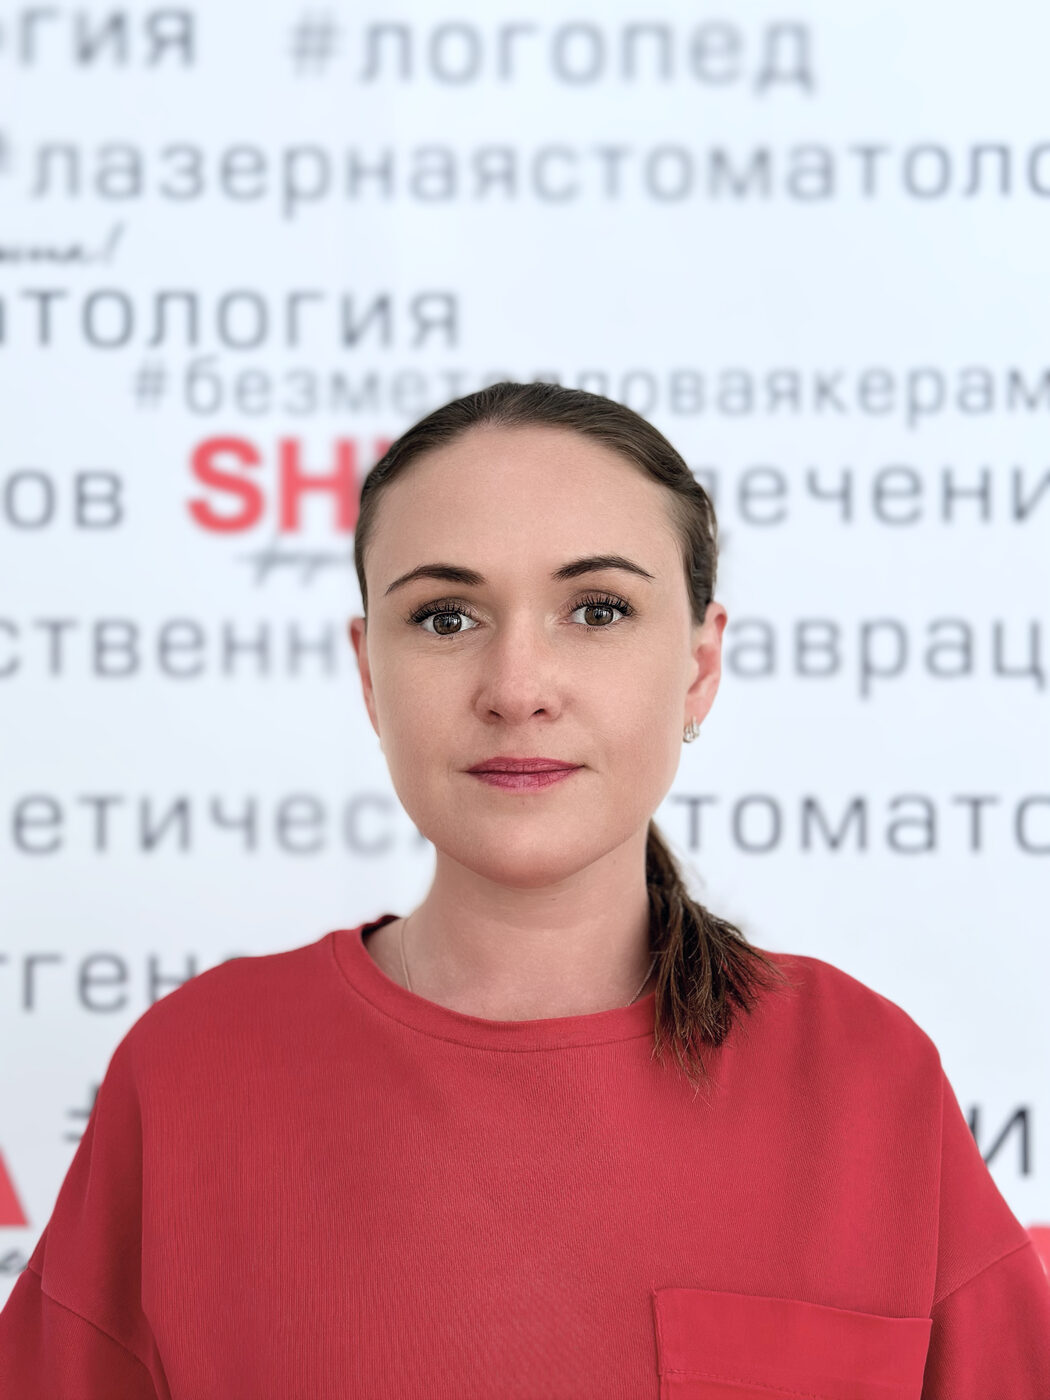 Лукьяненко Наталья Михайловна